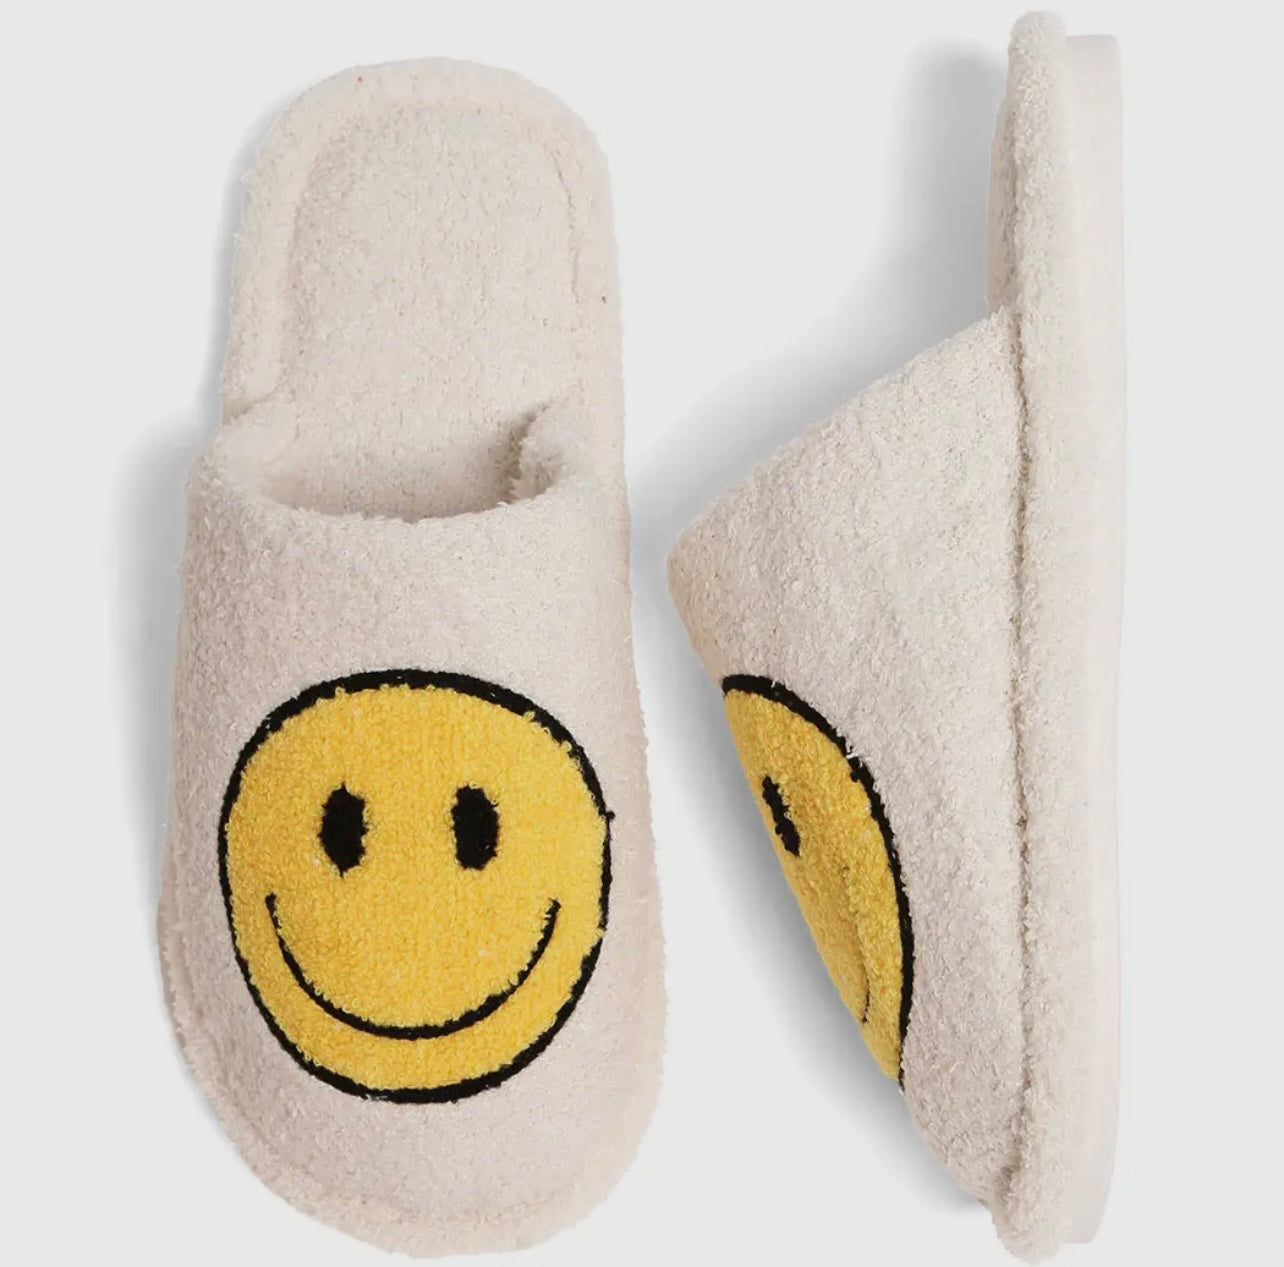 Cozy Smiley Slippers